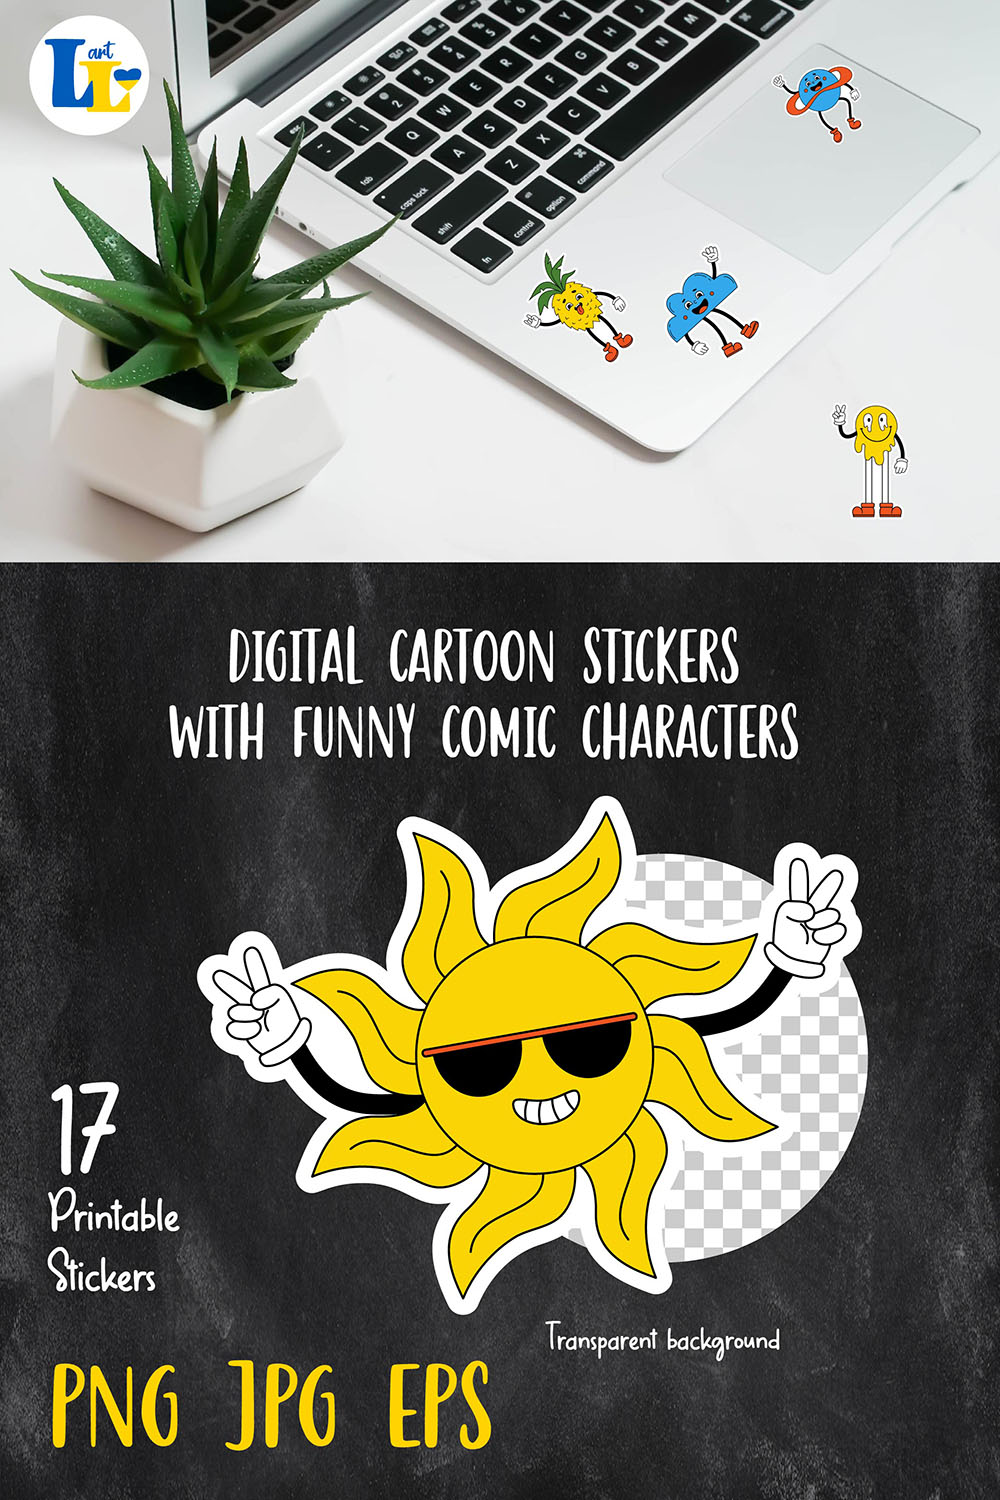 Funny Characters Digital Printable Stickers Bundle Pinterest Image.